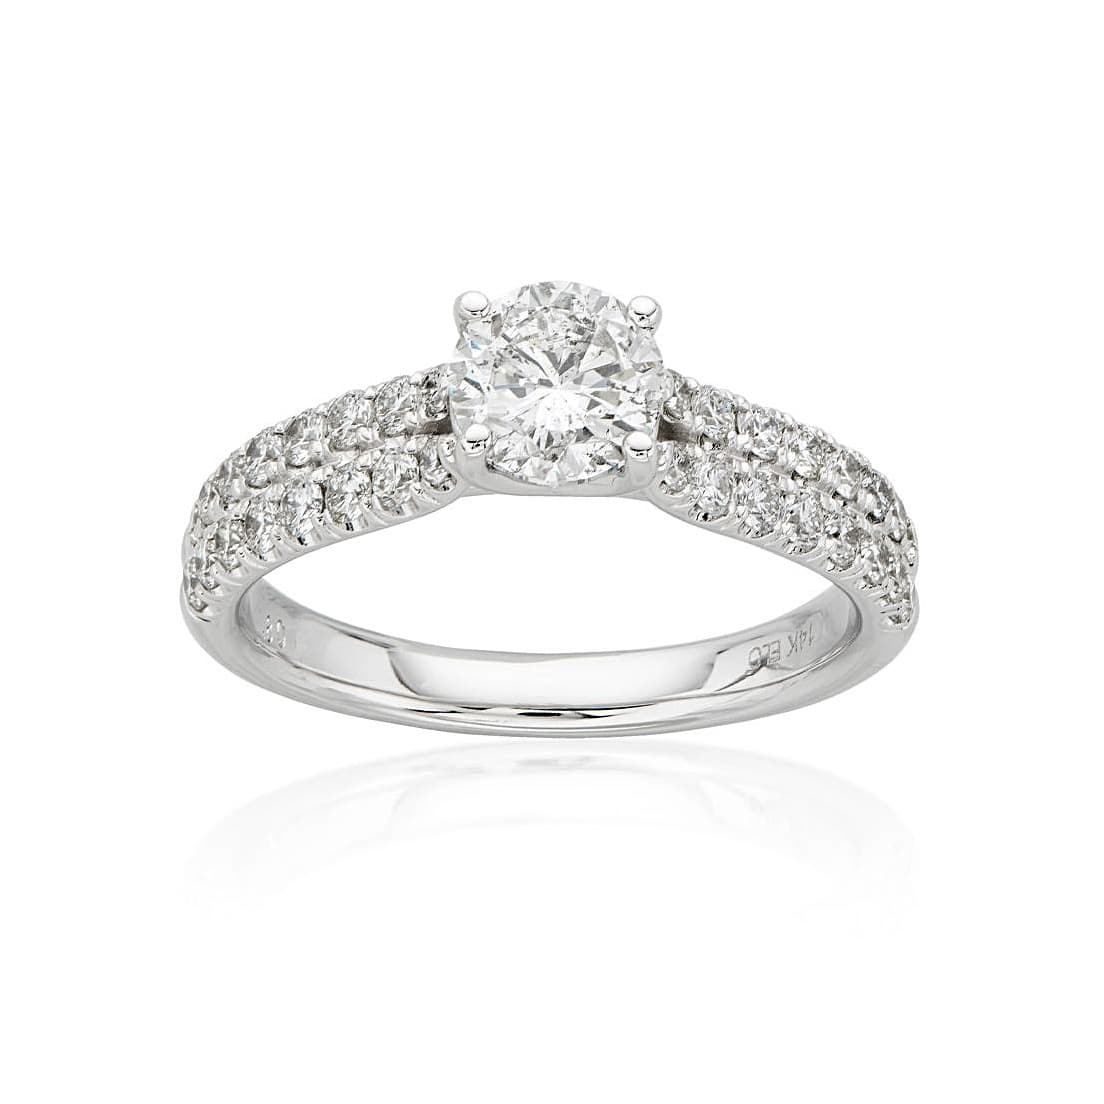 White Gold 1.30 CTW Diamond Engagement Ring with Round Diamond Center 0